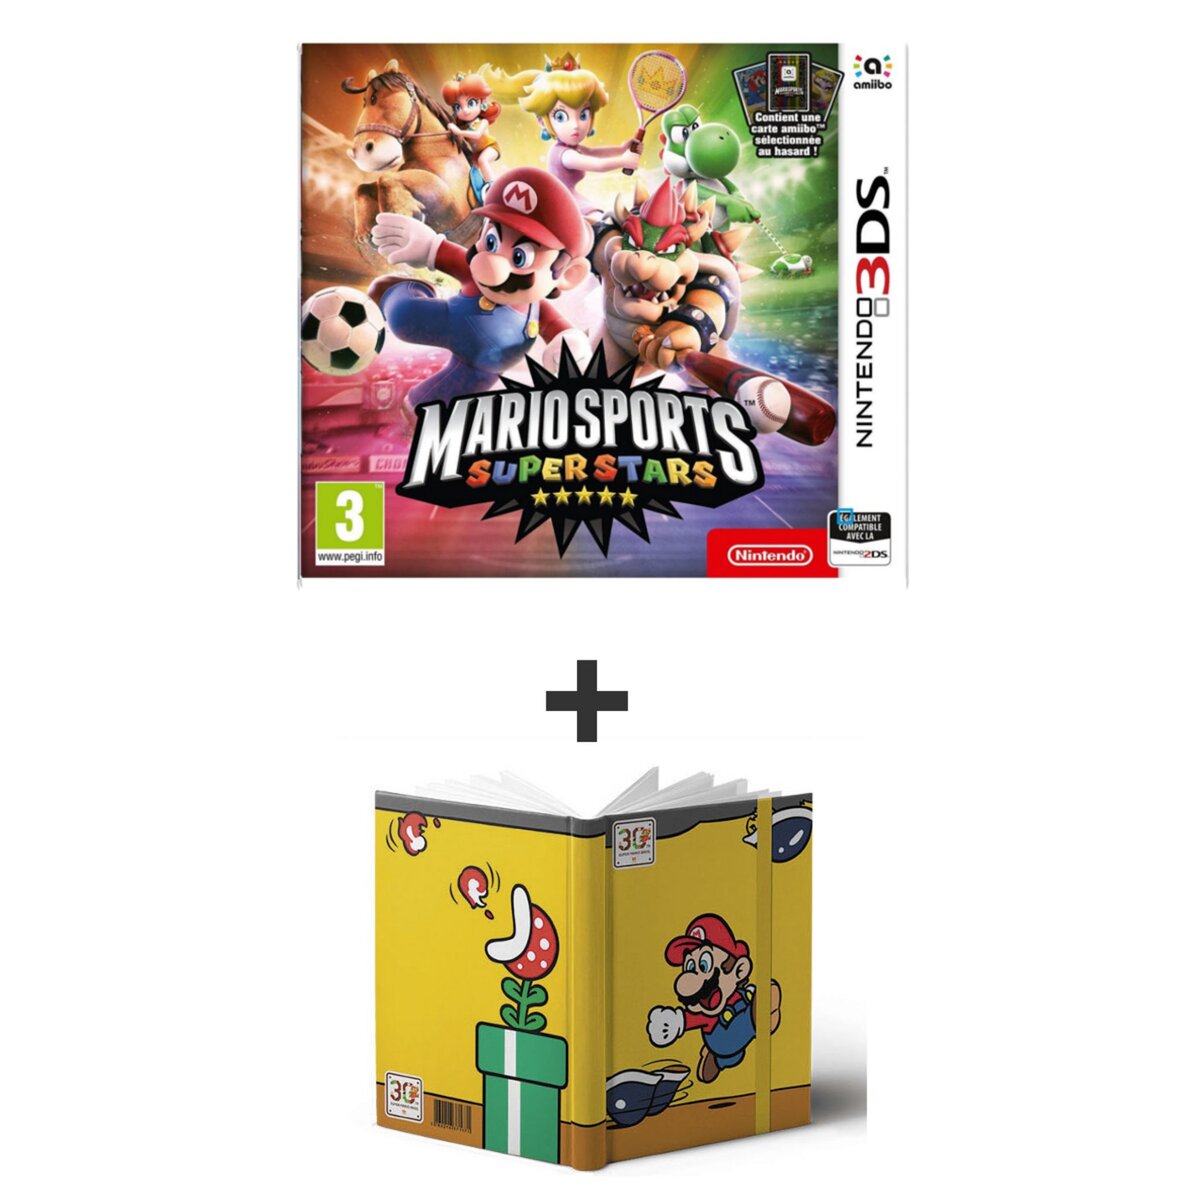 Mario Sports SuperStars + carte amiibo 3DS + Carnet de notes Super Mario Maker OFFERT